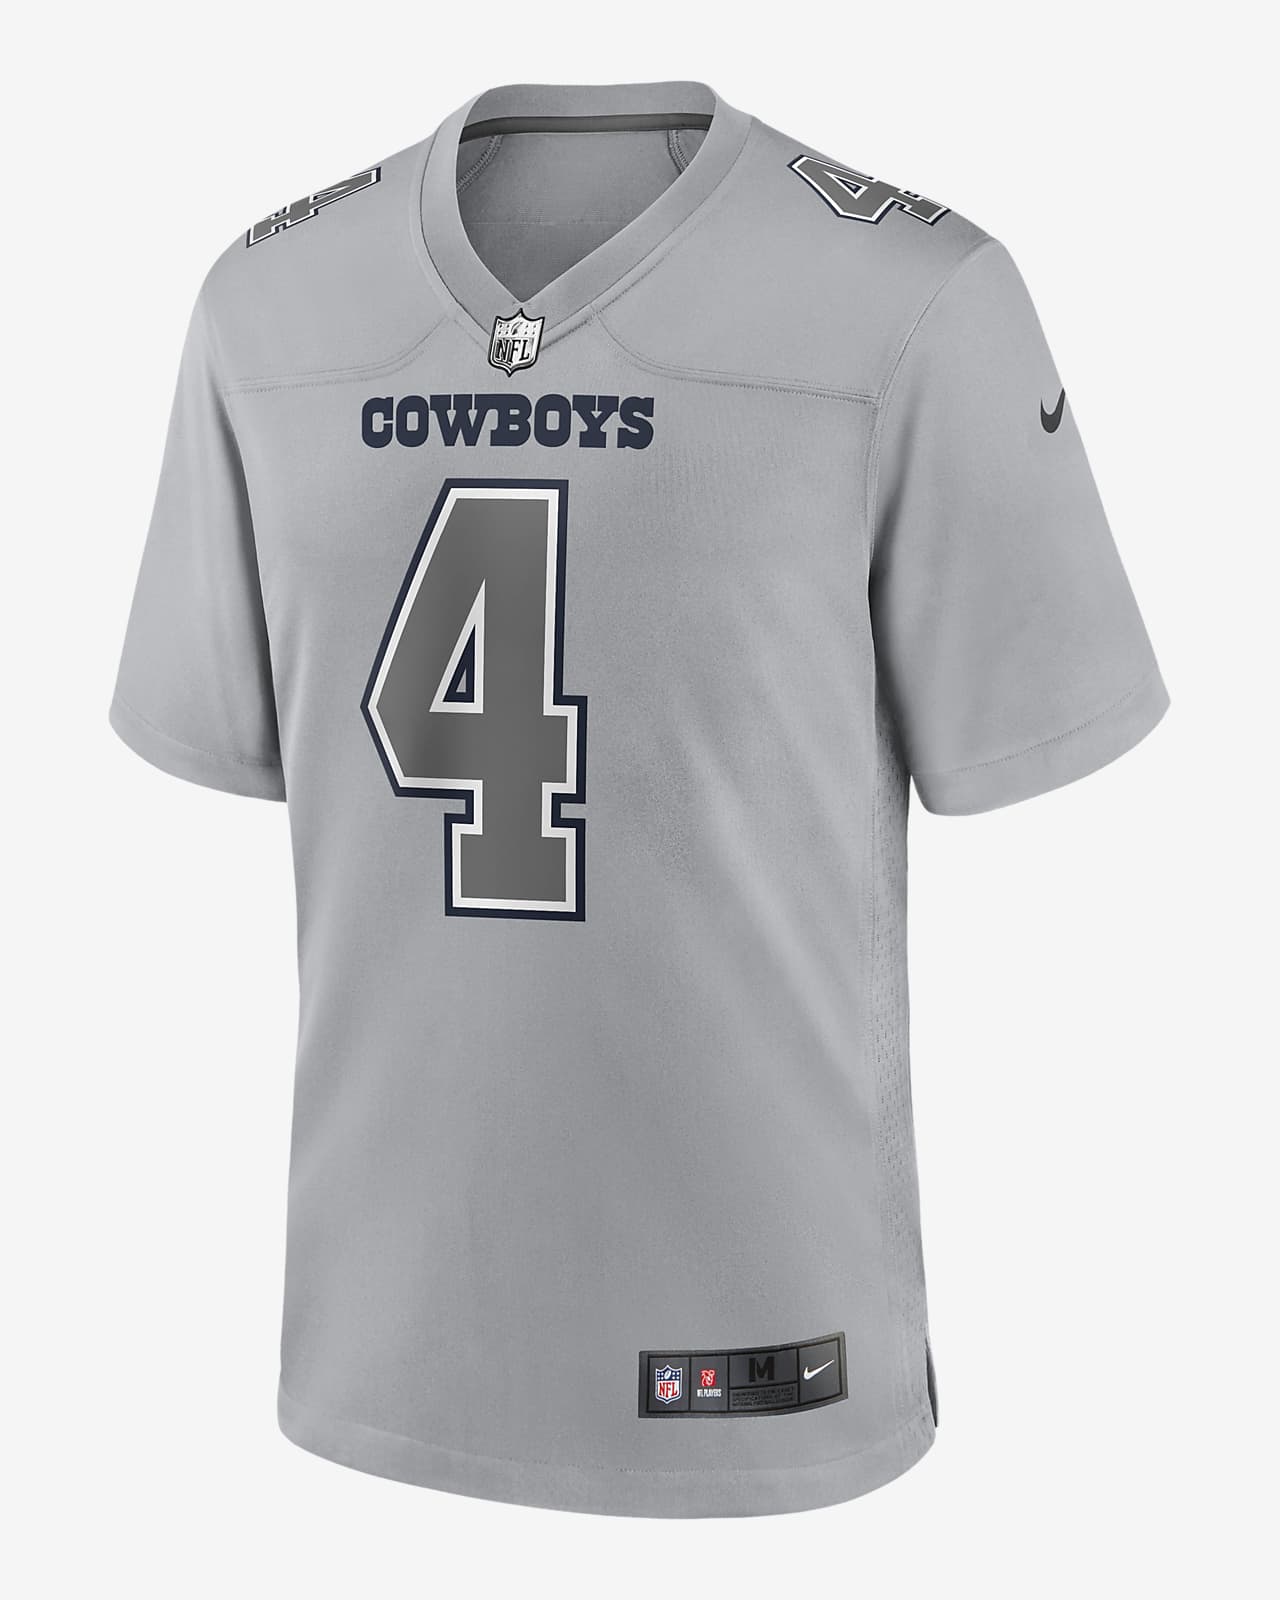 Onderbreking Zeemeeuw Heup NFL Dallas Cowboys Atmosphere (Dak Prescott) Men's Fashion Football Jersey.  Nike.com